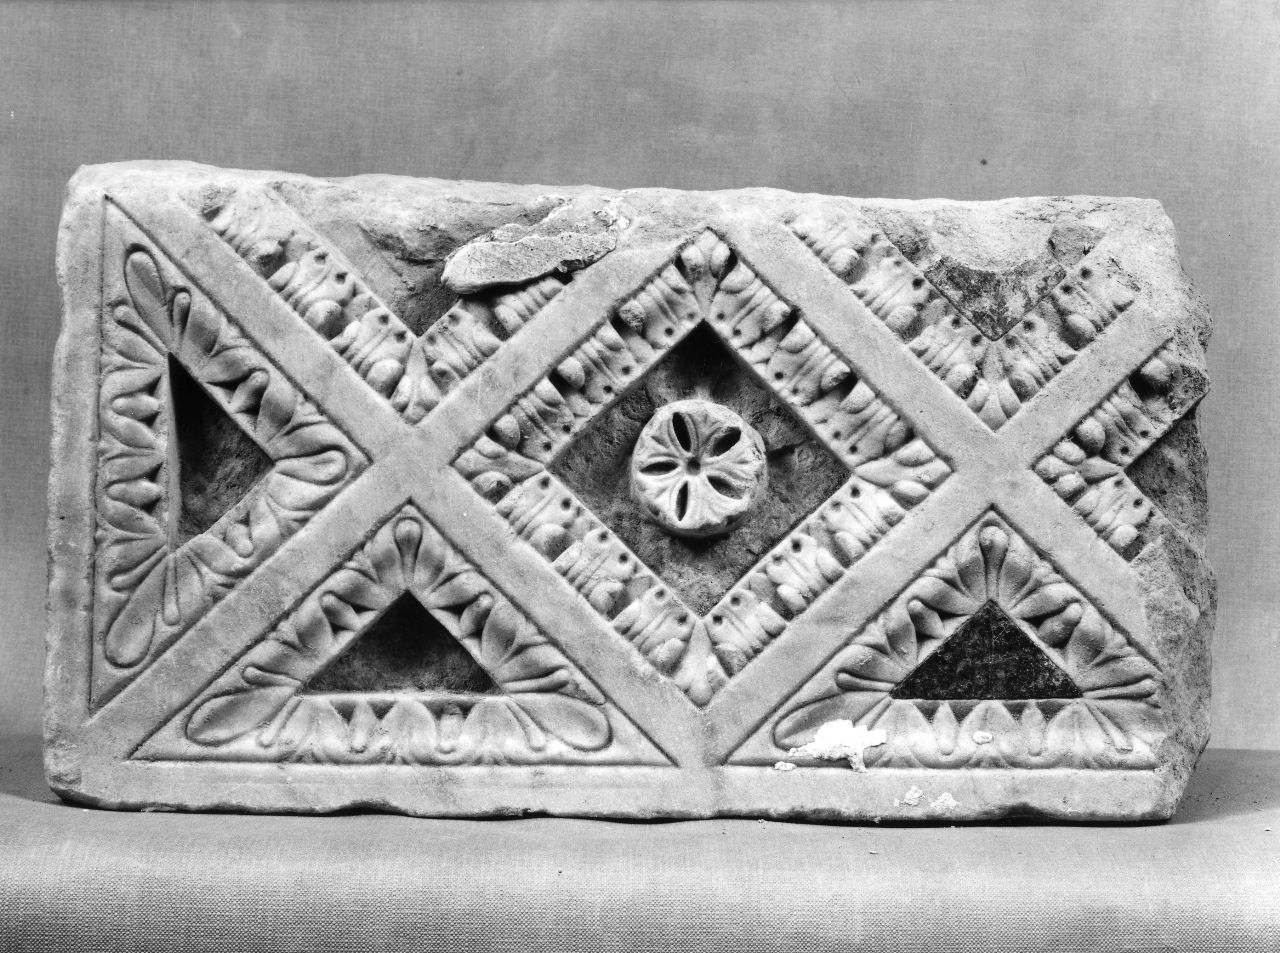 motivi decorativi vegetali, motivi decorativi geometrici (decorazione plastica, frammento) - manifattura toscana (primo quarto sec. XIII)